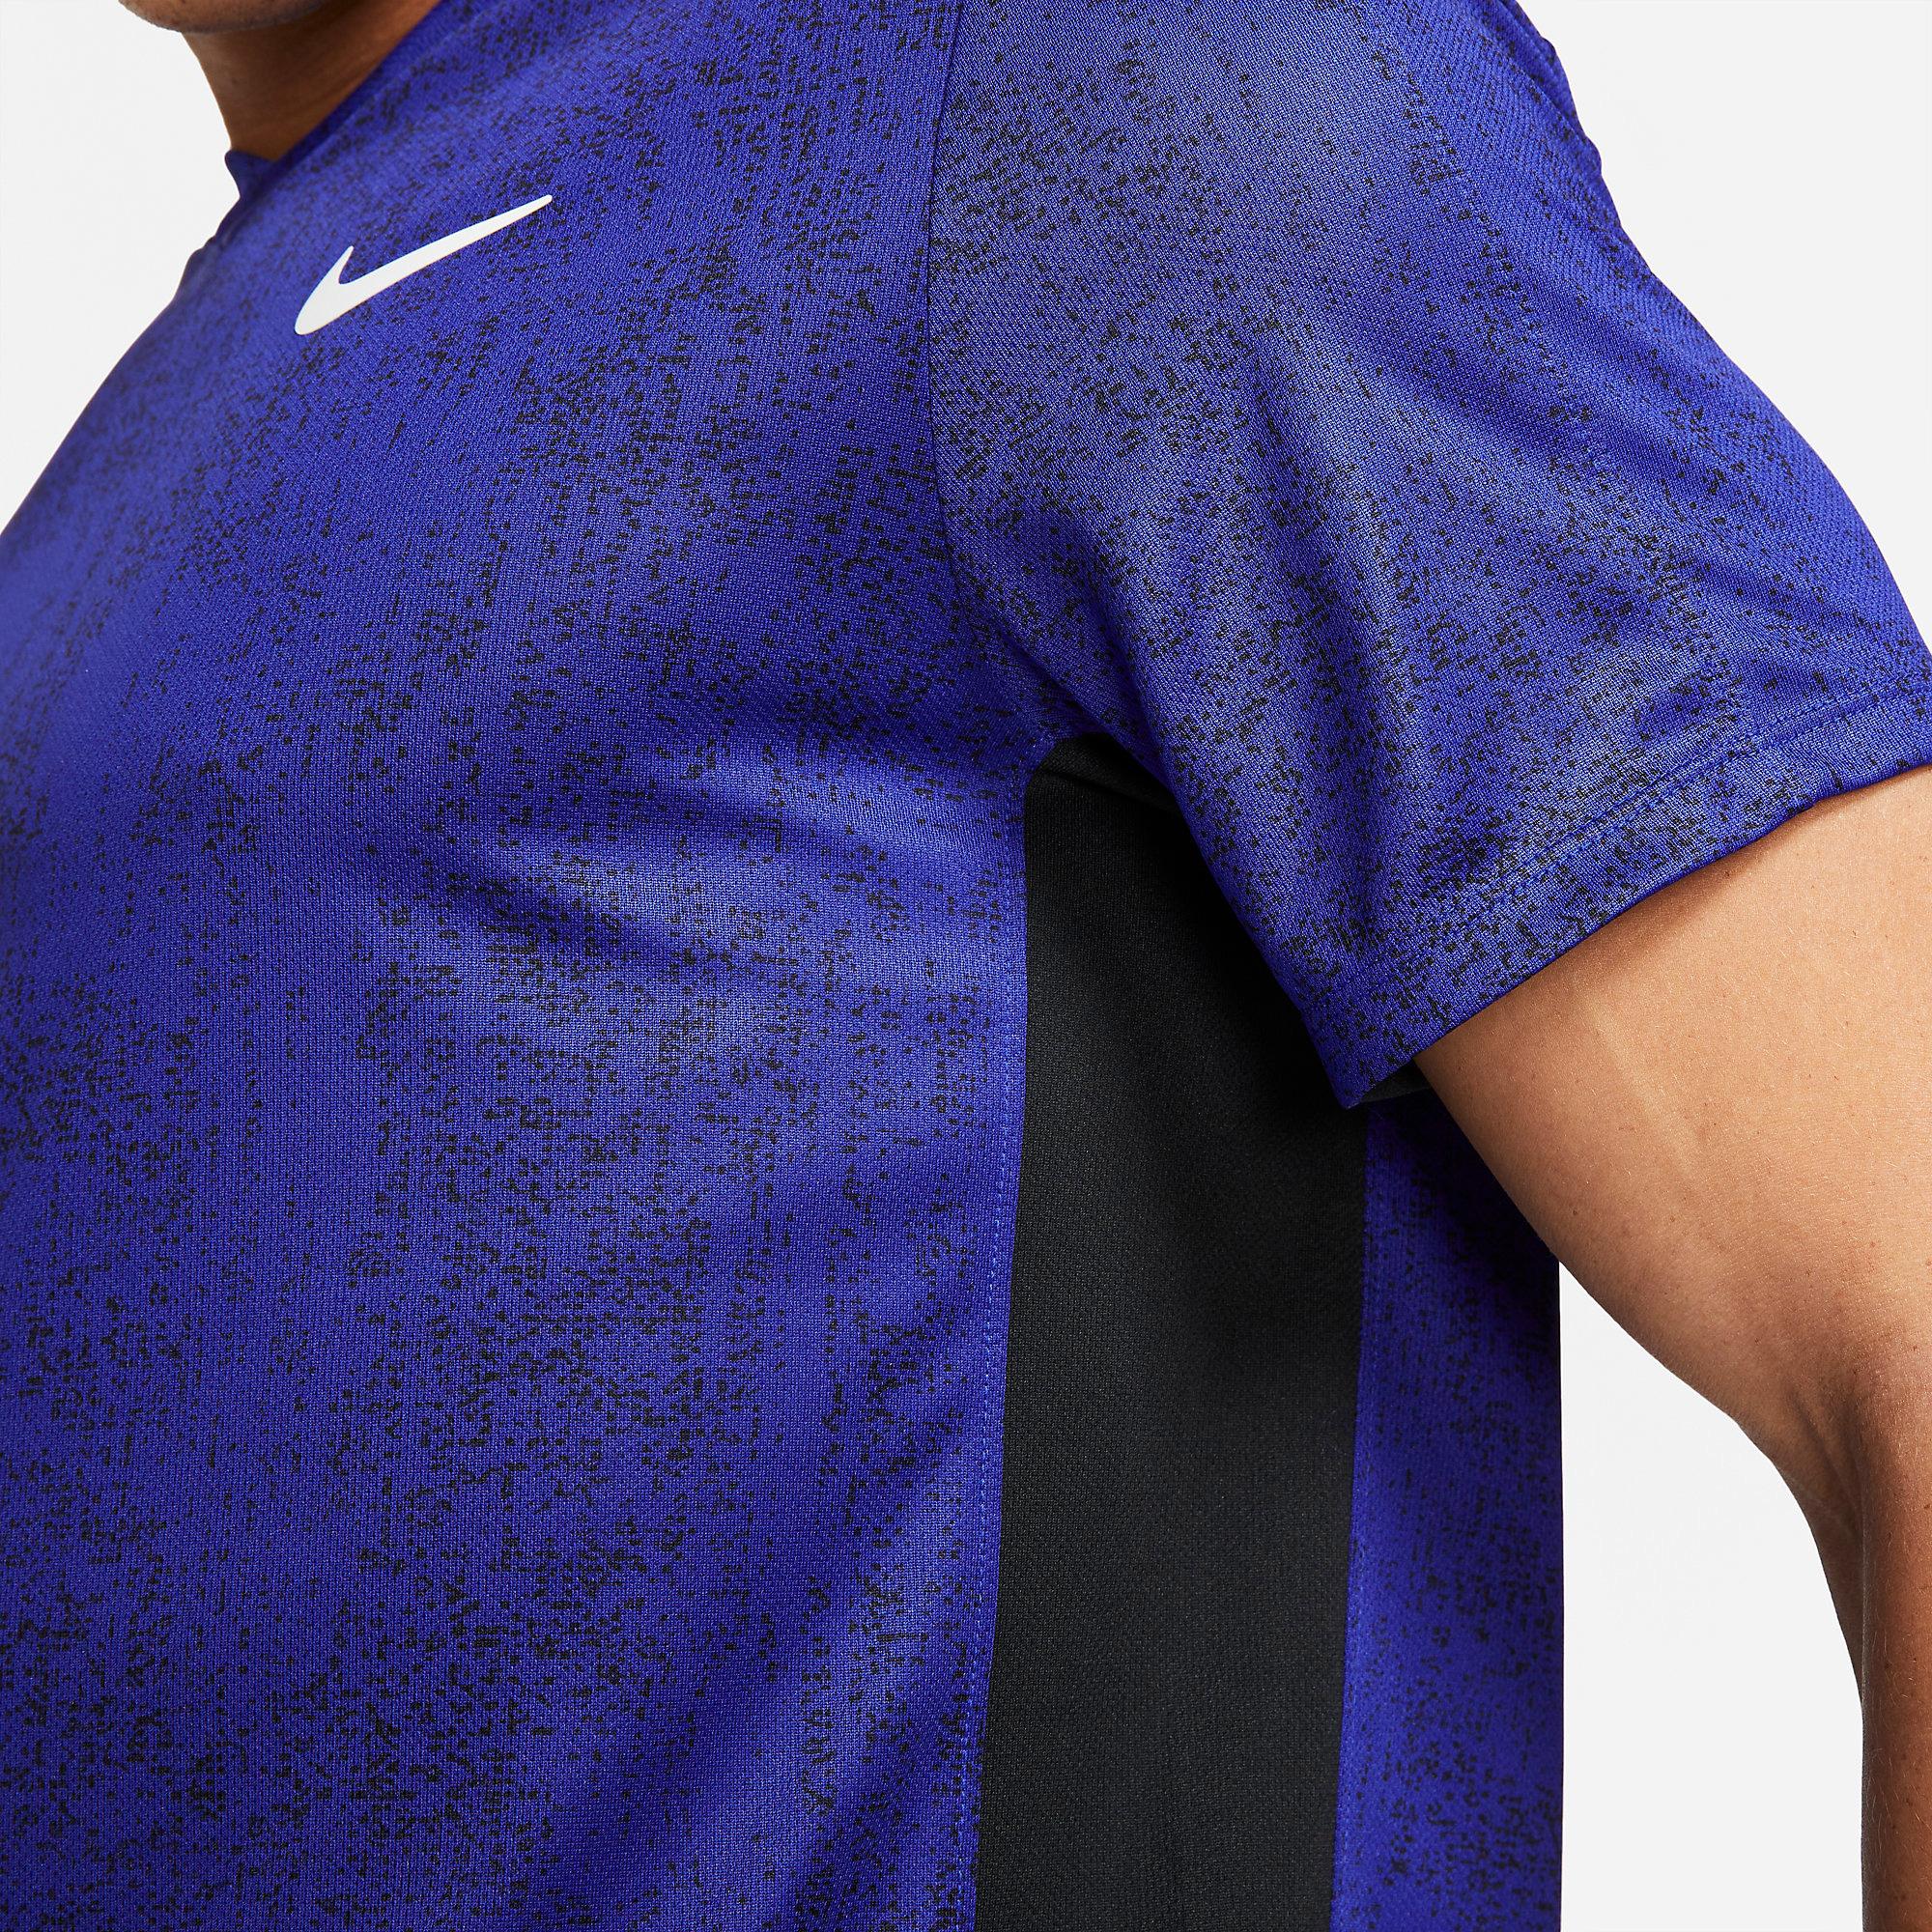 Nike Mens Dri-FIT Victory Printed Top - Blue/Black - Tennisnuts.com